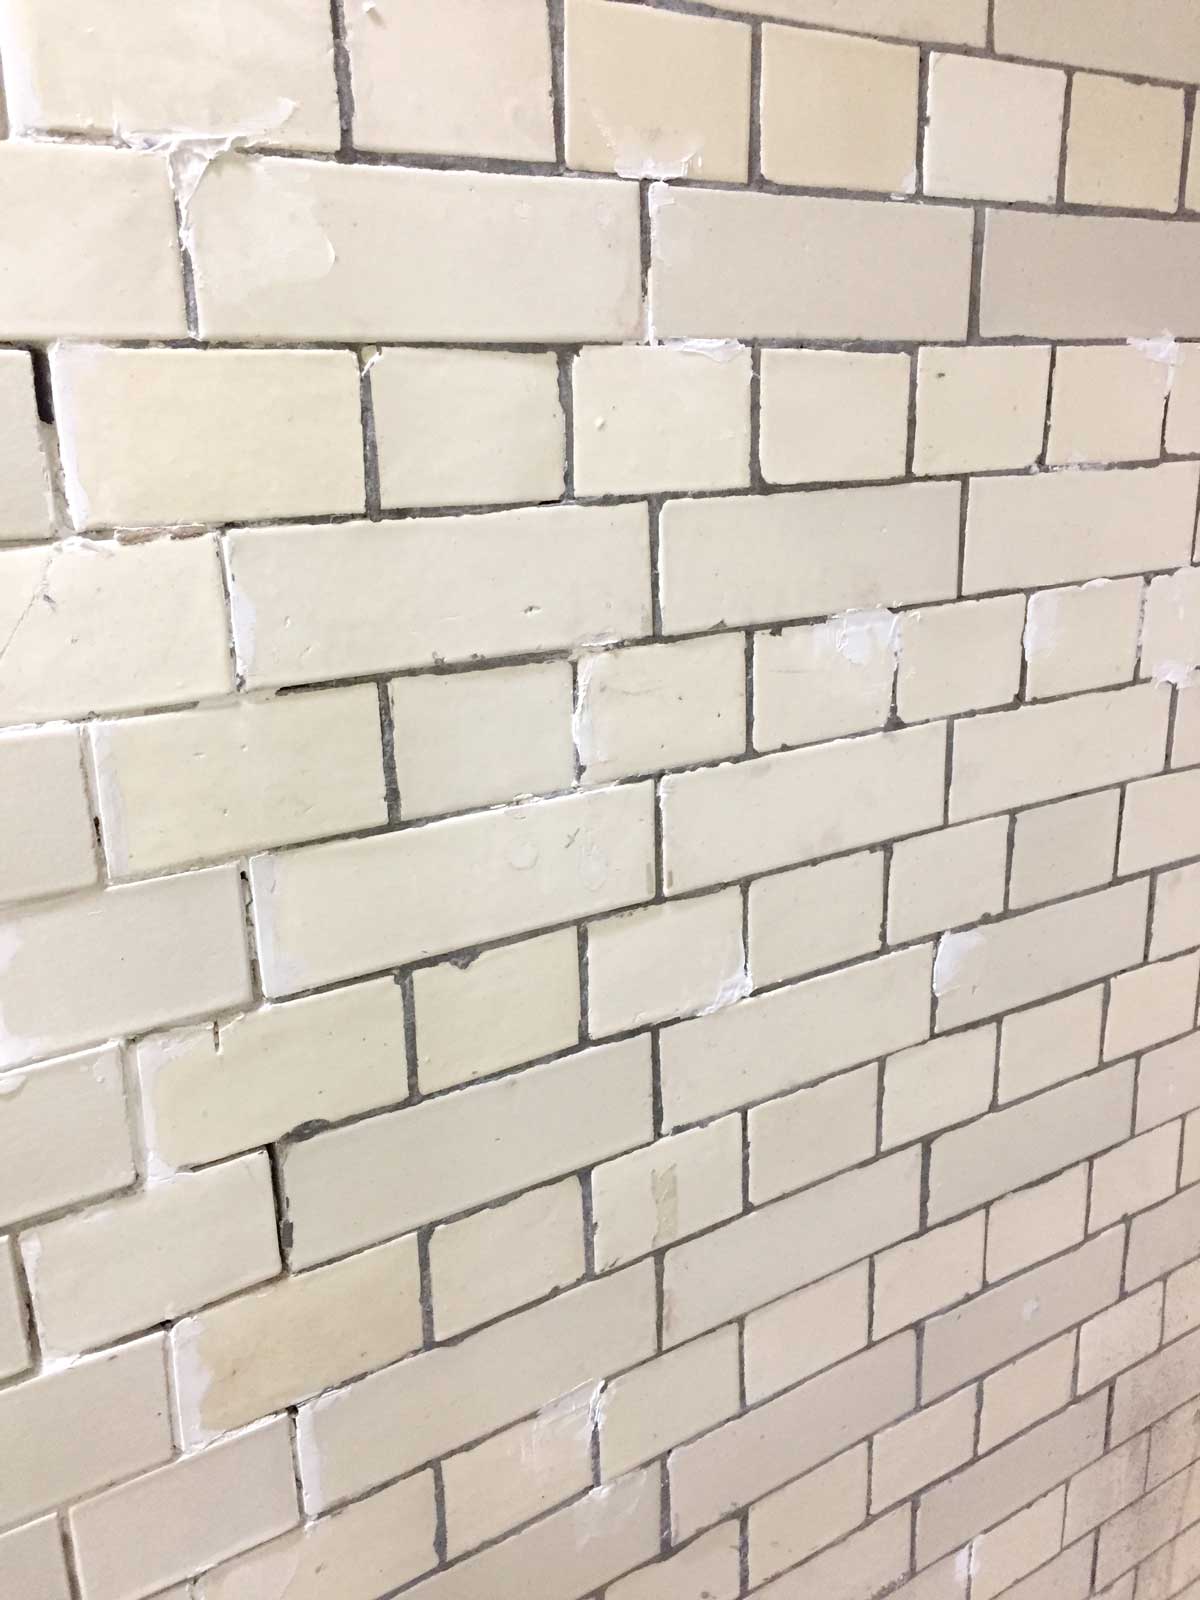 westminster-fire-station-existing-white-glazed-tiles